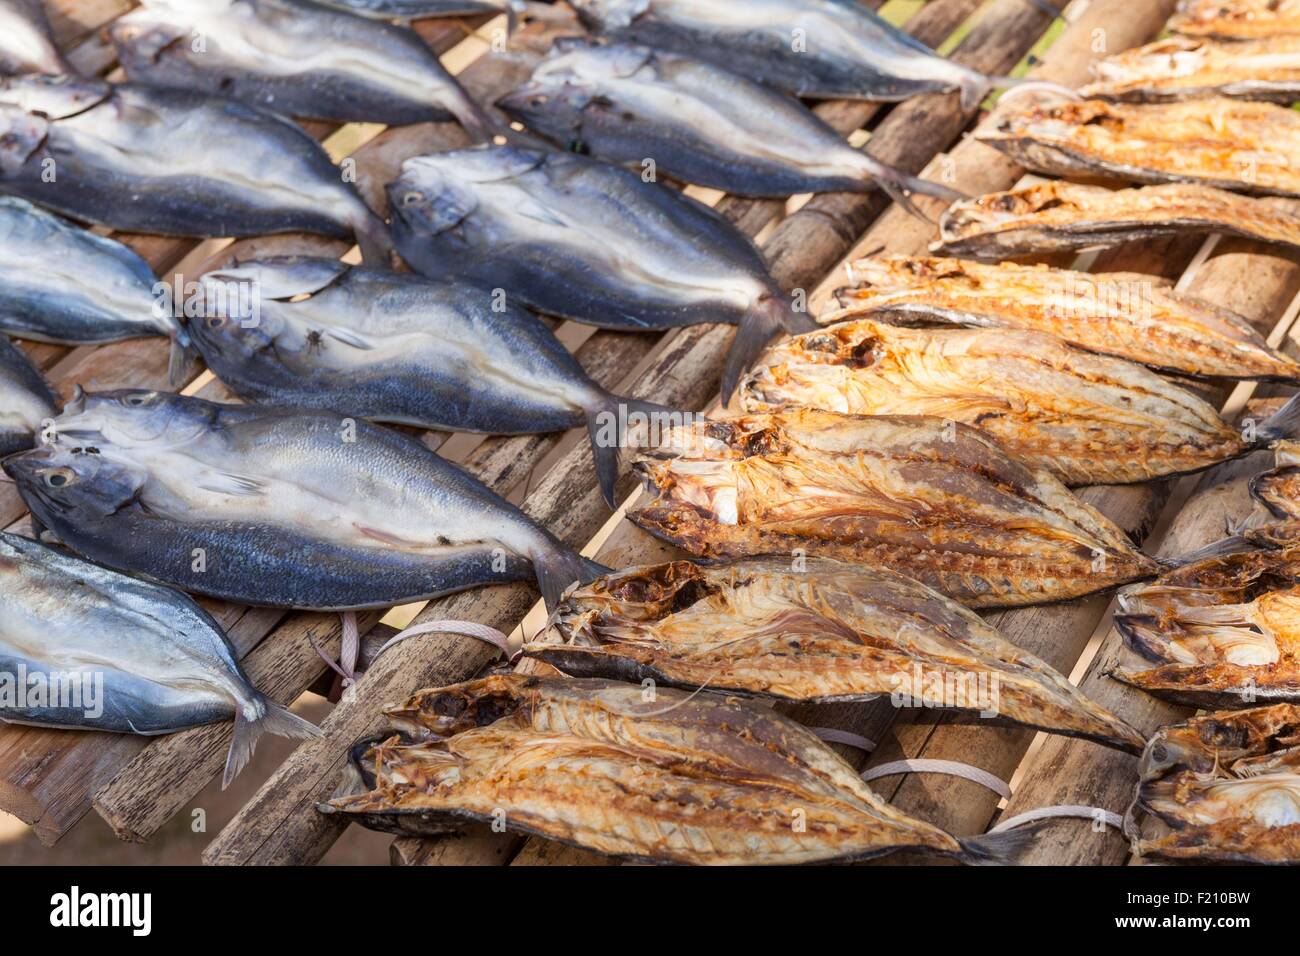 Indonesia, Maluku province, East Seram, Gorom island, dried fishes Stock Photo